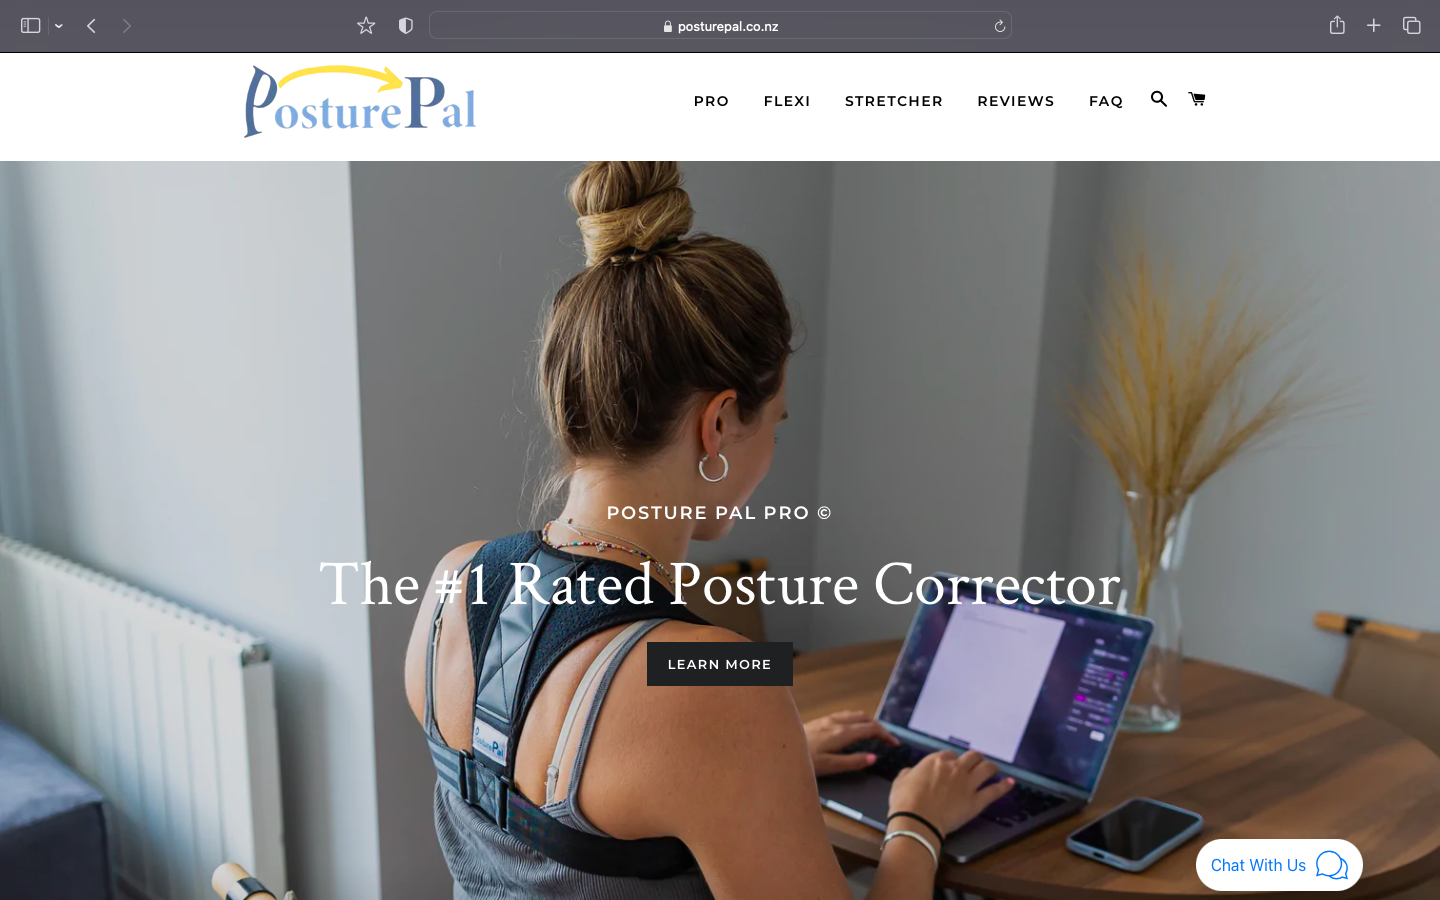 posture pal | PostureReminderApp.com list of posture app comparisons.